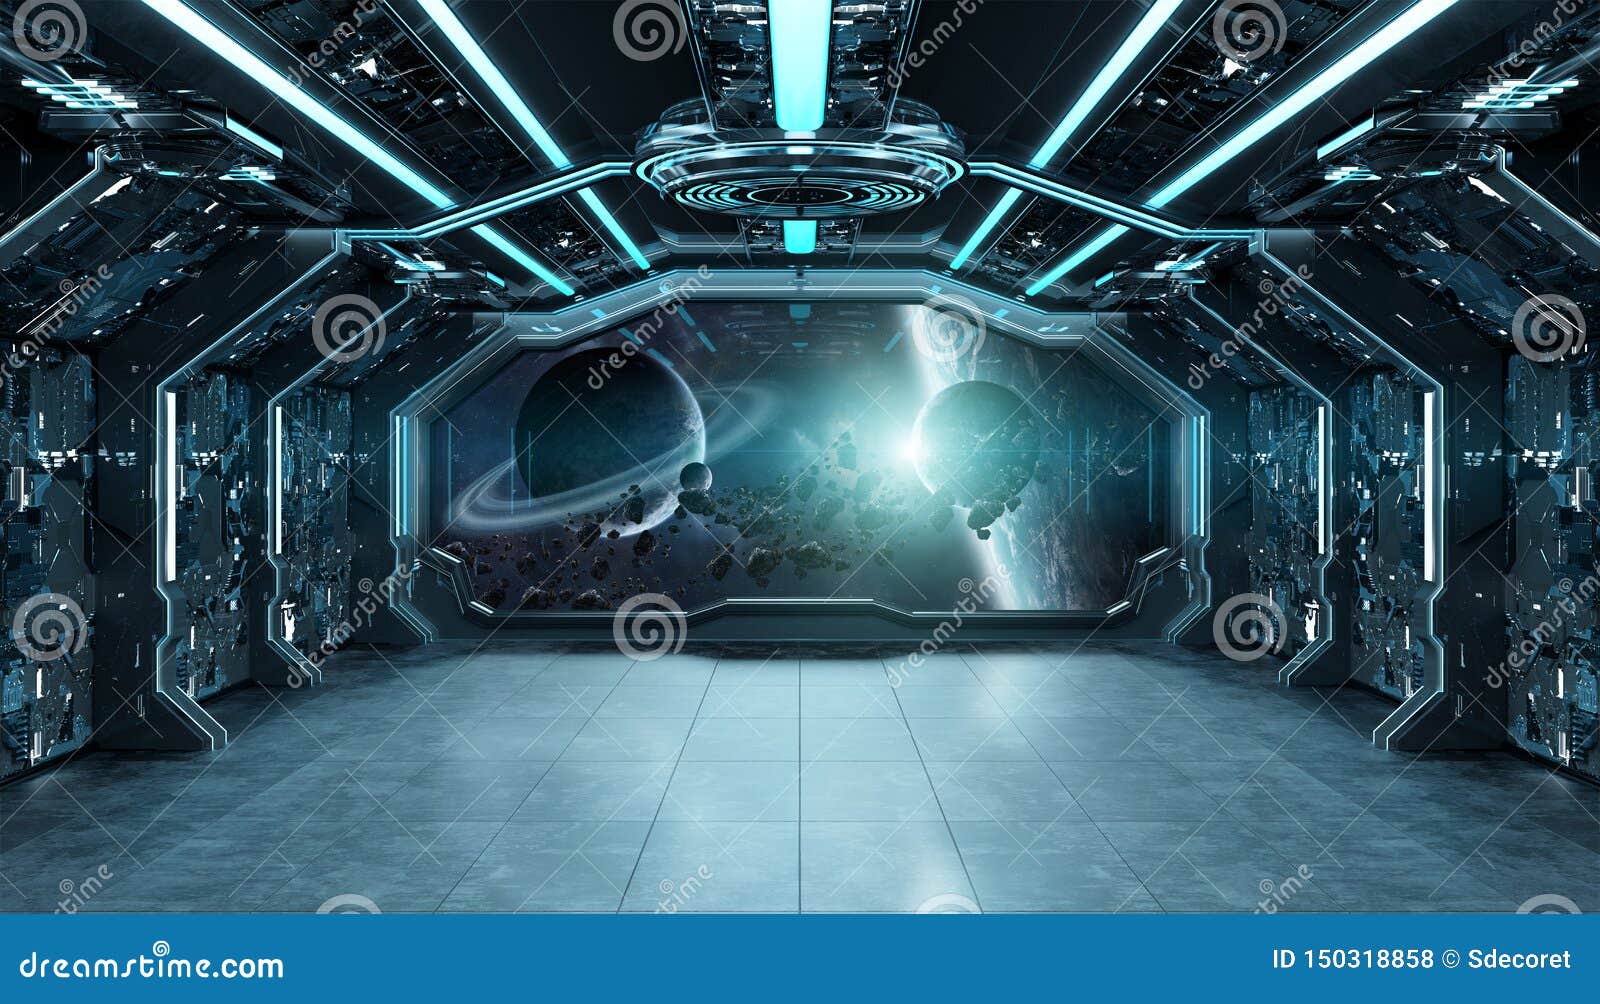 Dark Blue Spaceship Futuristic Interior With Window View On